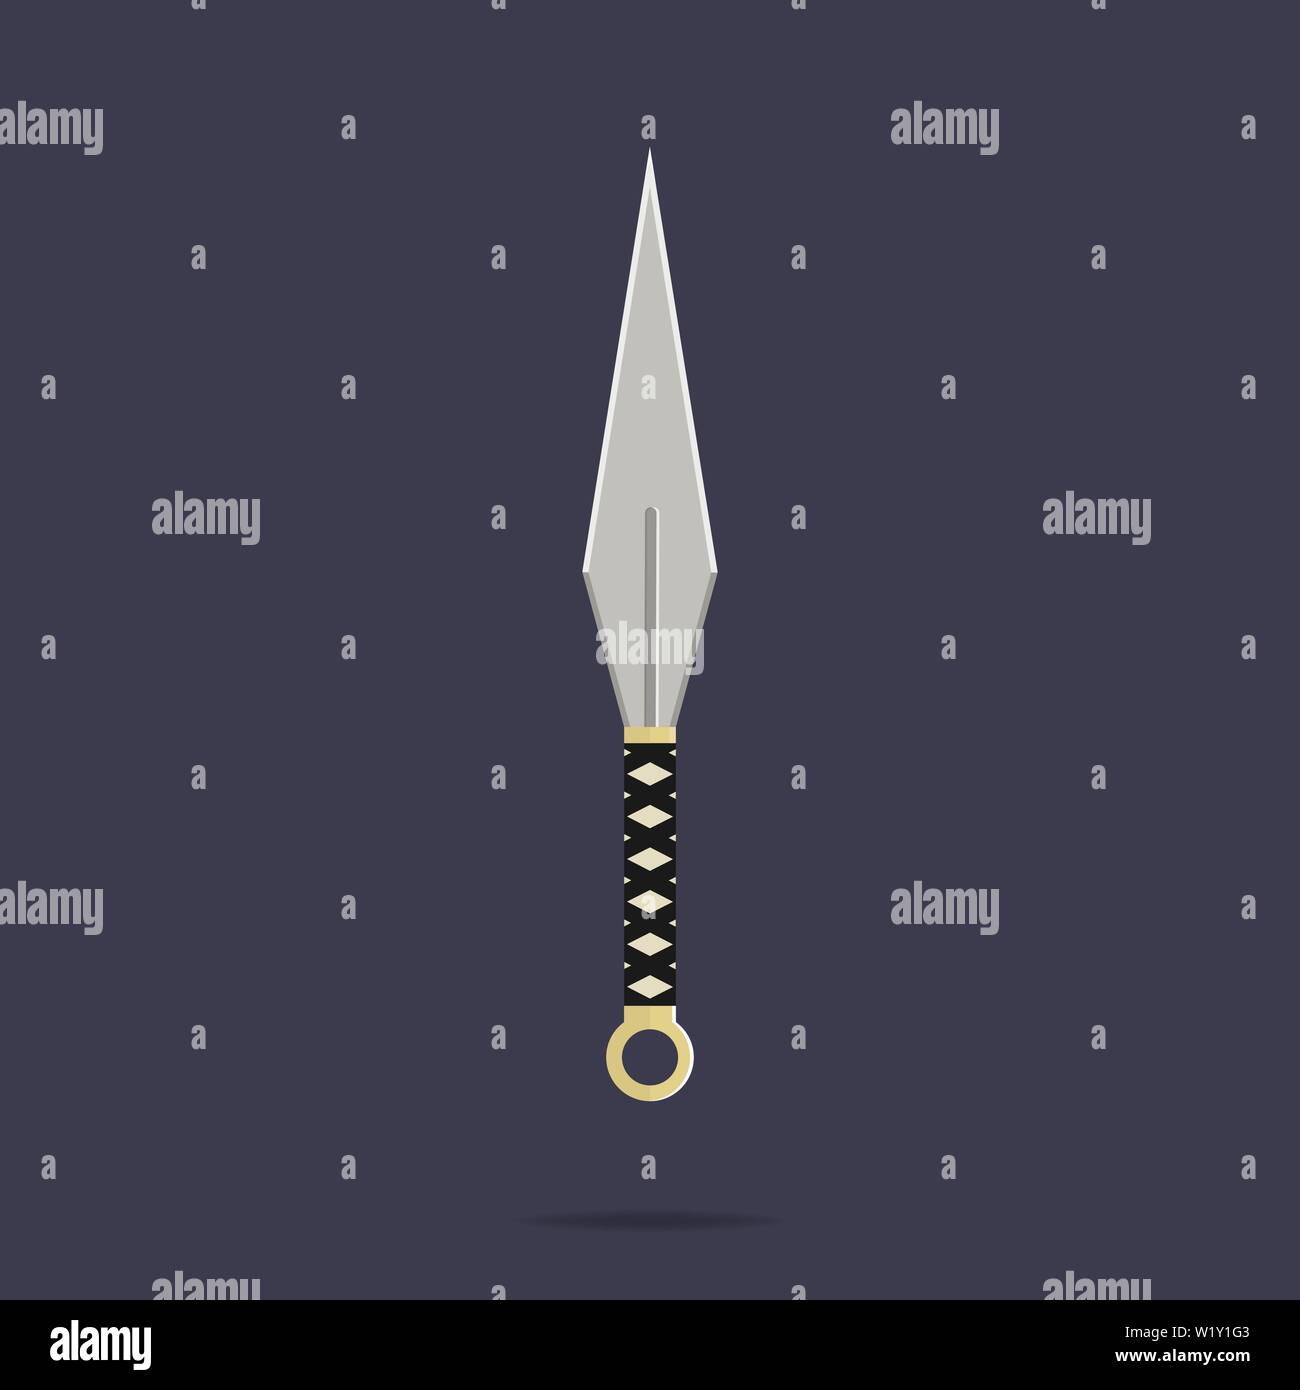 https://c8.alamy.com/comp/W1Y1G3/kunai-throwing-knife-icon-ninja-weapon-samurai-equipment-cartoon-style-clean-and-modern-vector-illustration-for-design-web-W1Y1G3.jpg